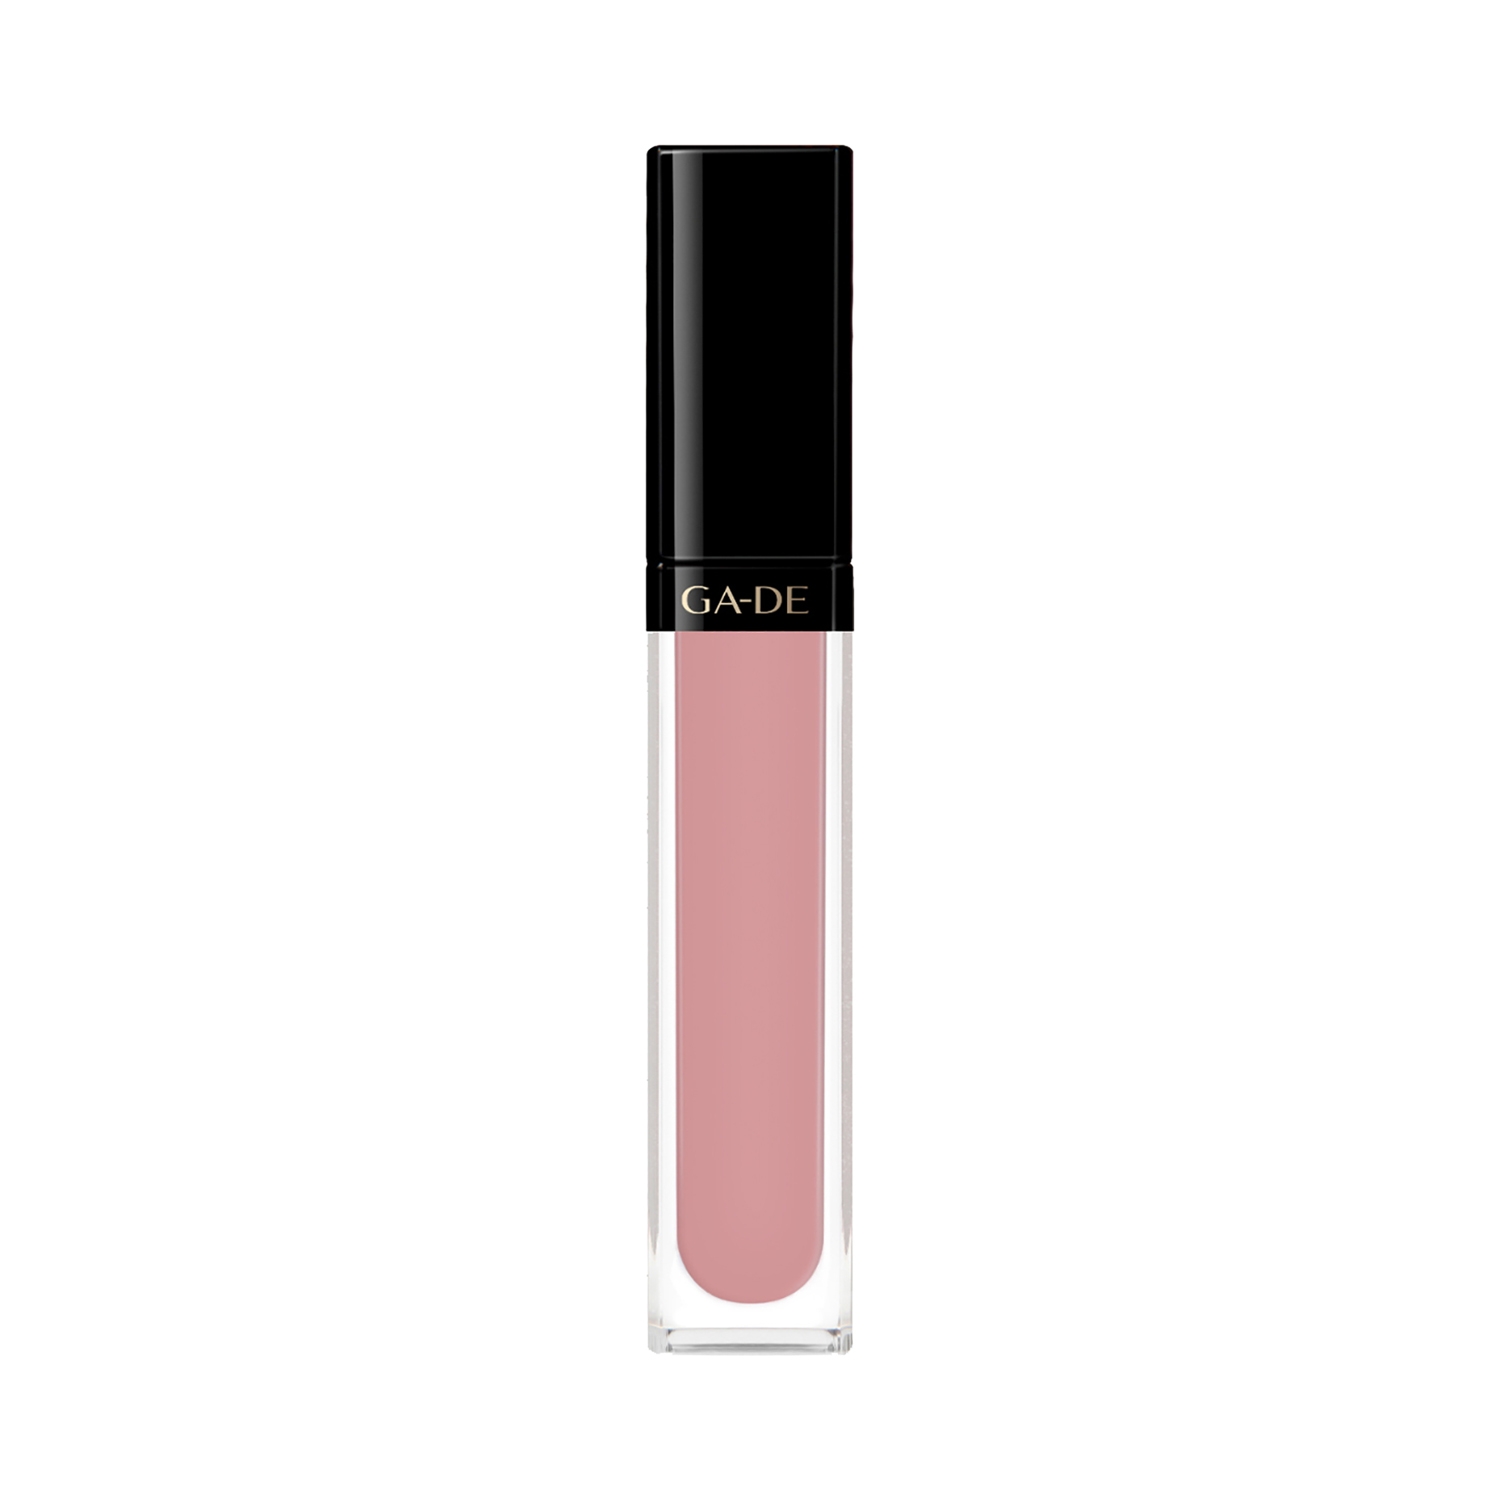 GA-DE | GA-DE Crystal Lights Lip Gloss - 825 Tea Rose (6ml)